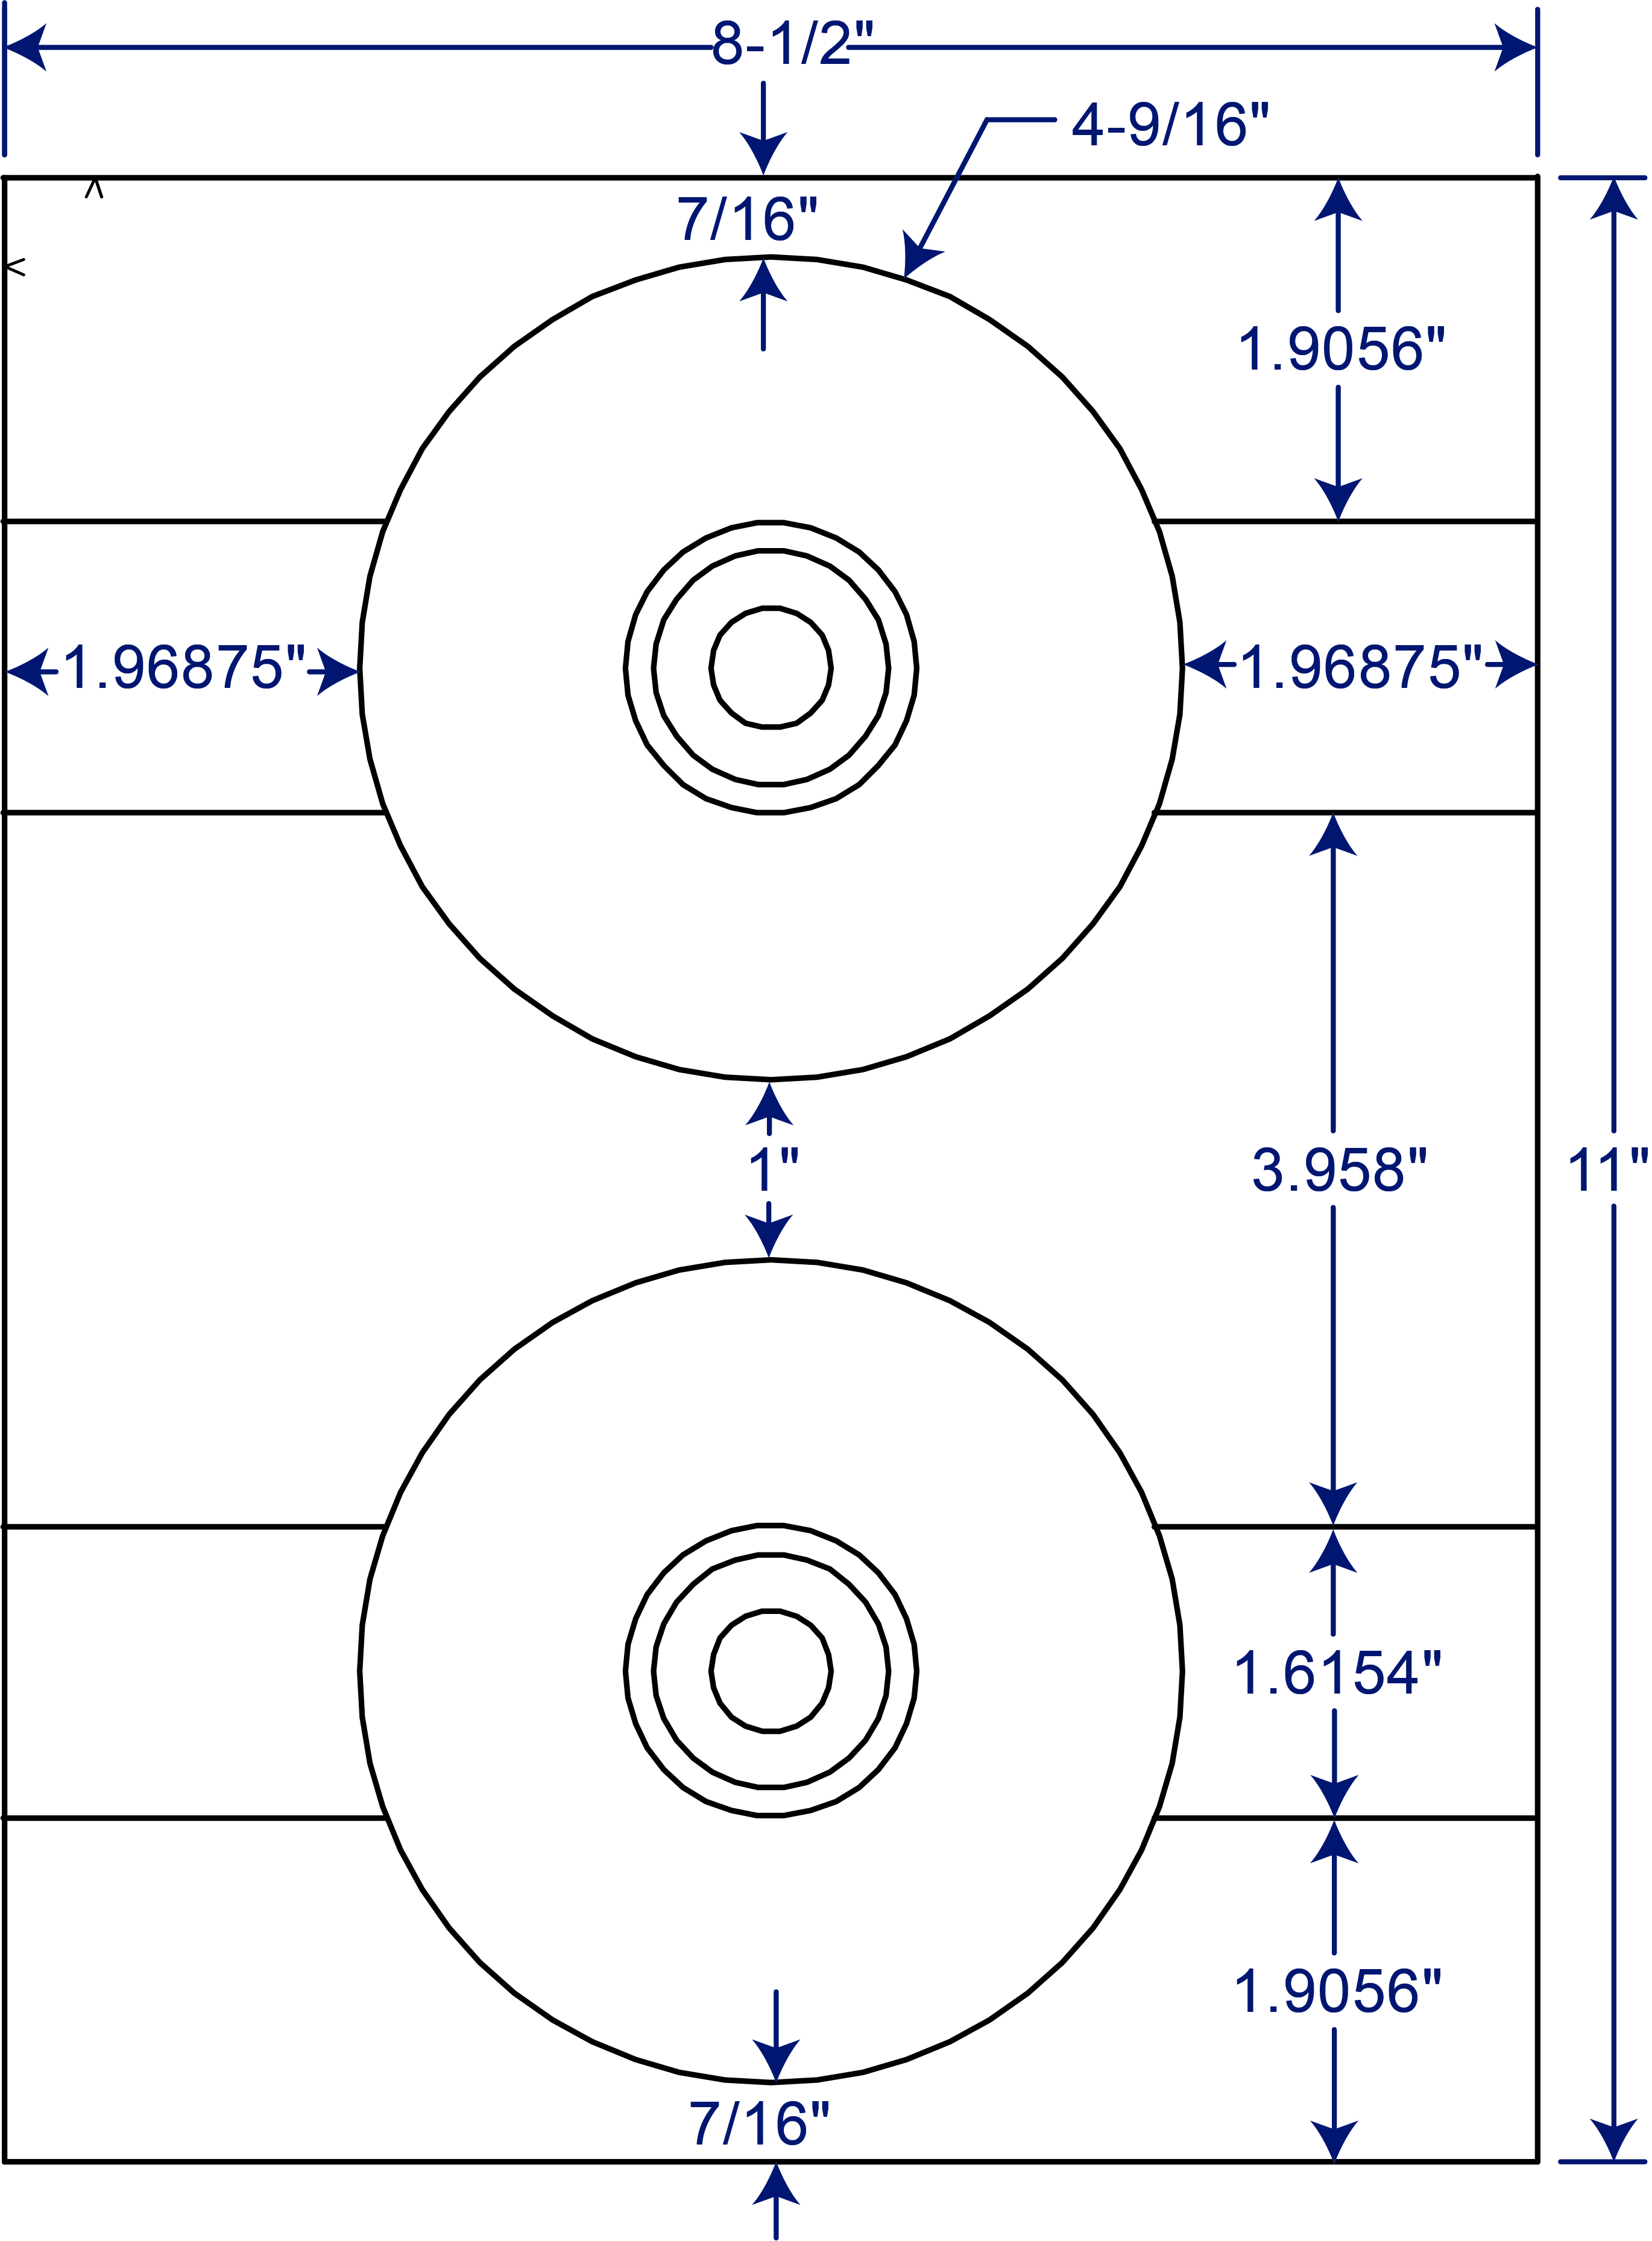 4-9/16" Diameter Laser/Inkjet CD Donut with Hub Cap Labels